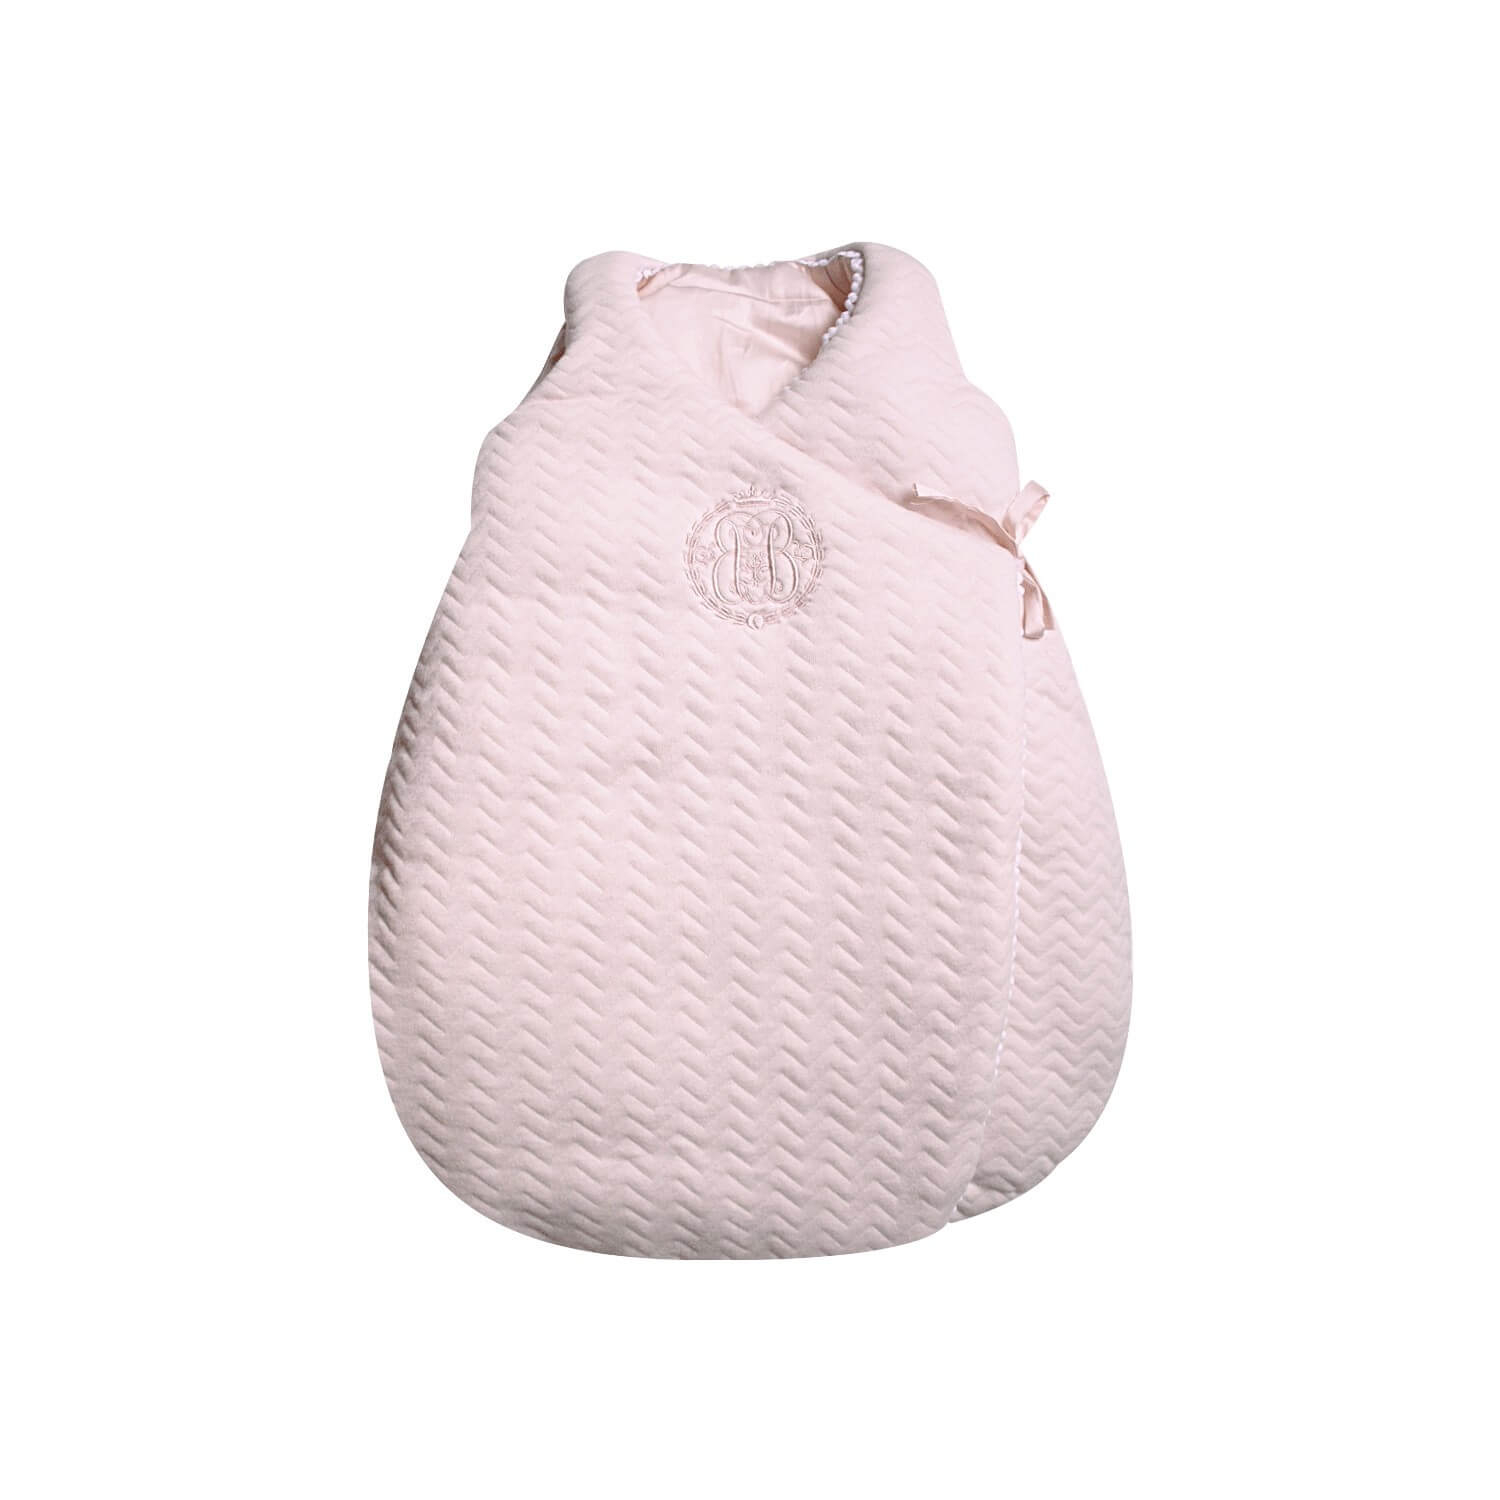 Klassisch-schicke Babyschlafsack rosa